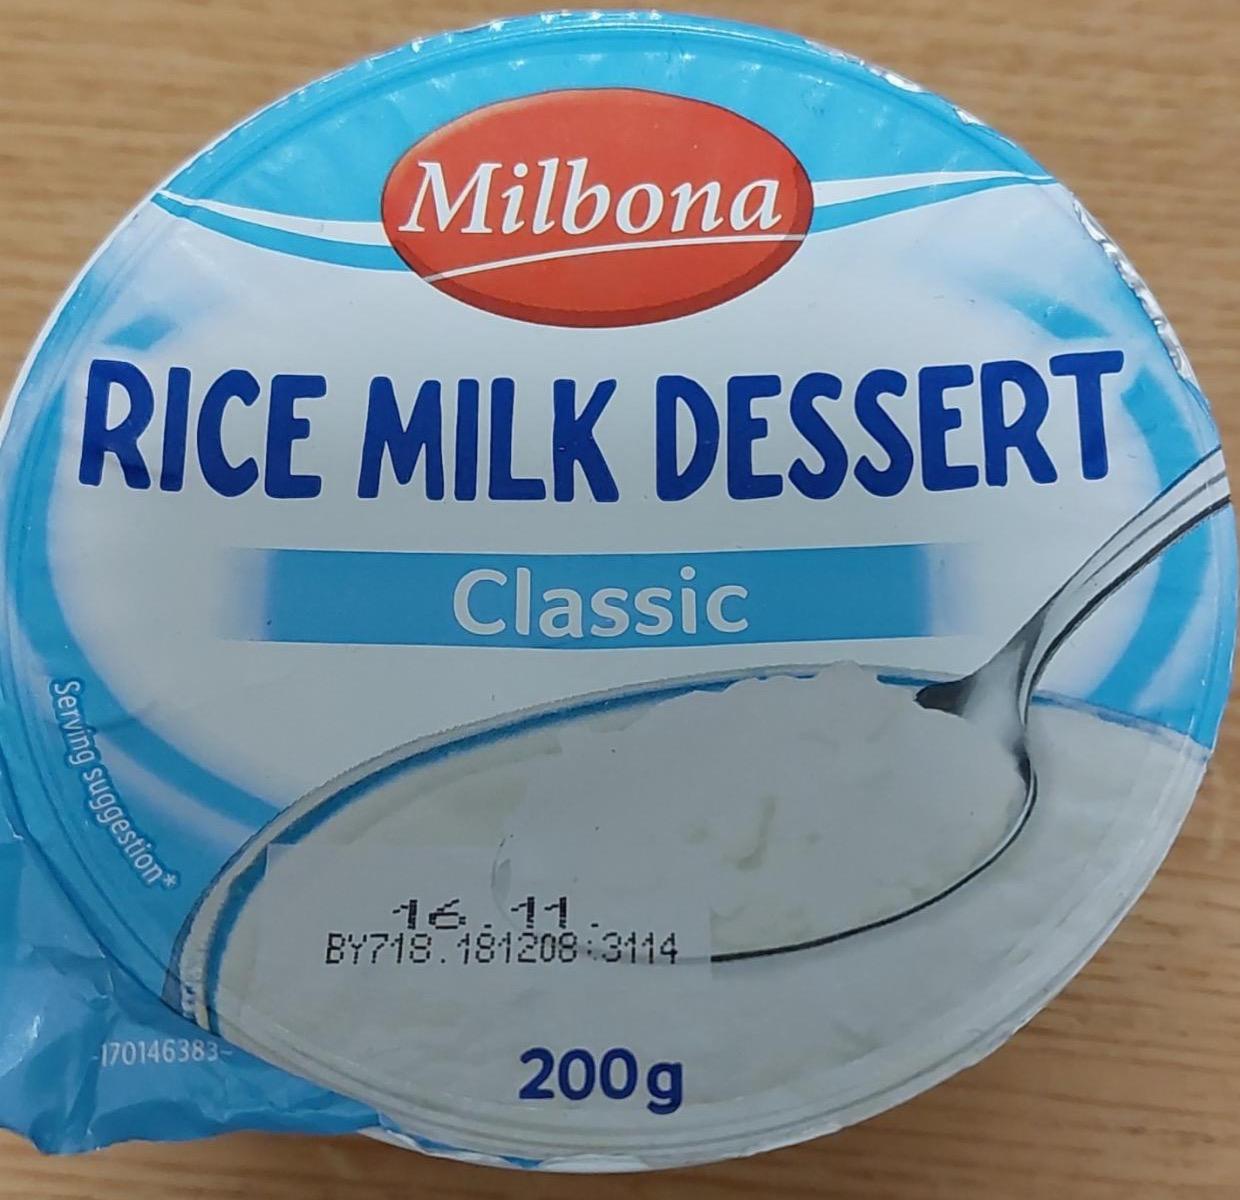 Képek - Rice milk dessert Classic Milbona